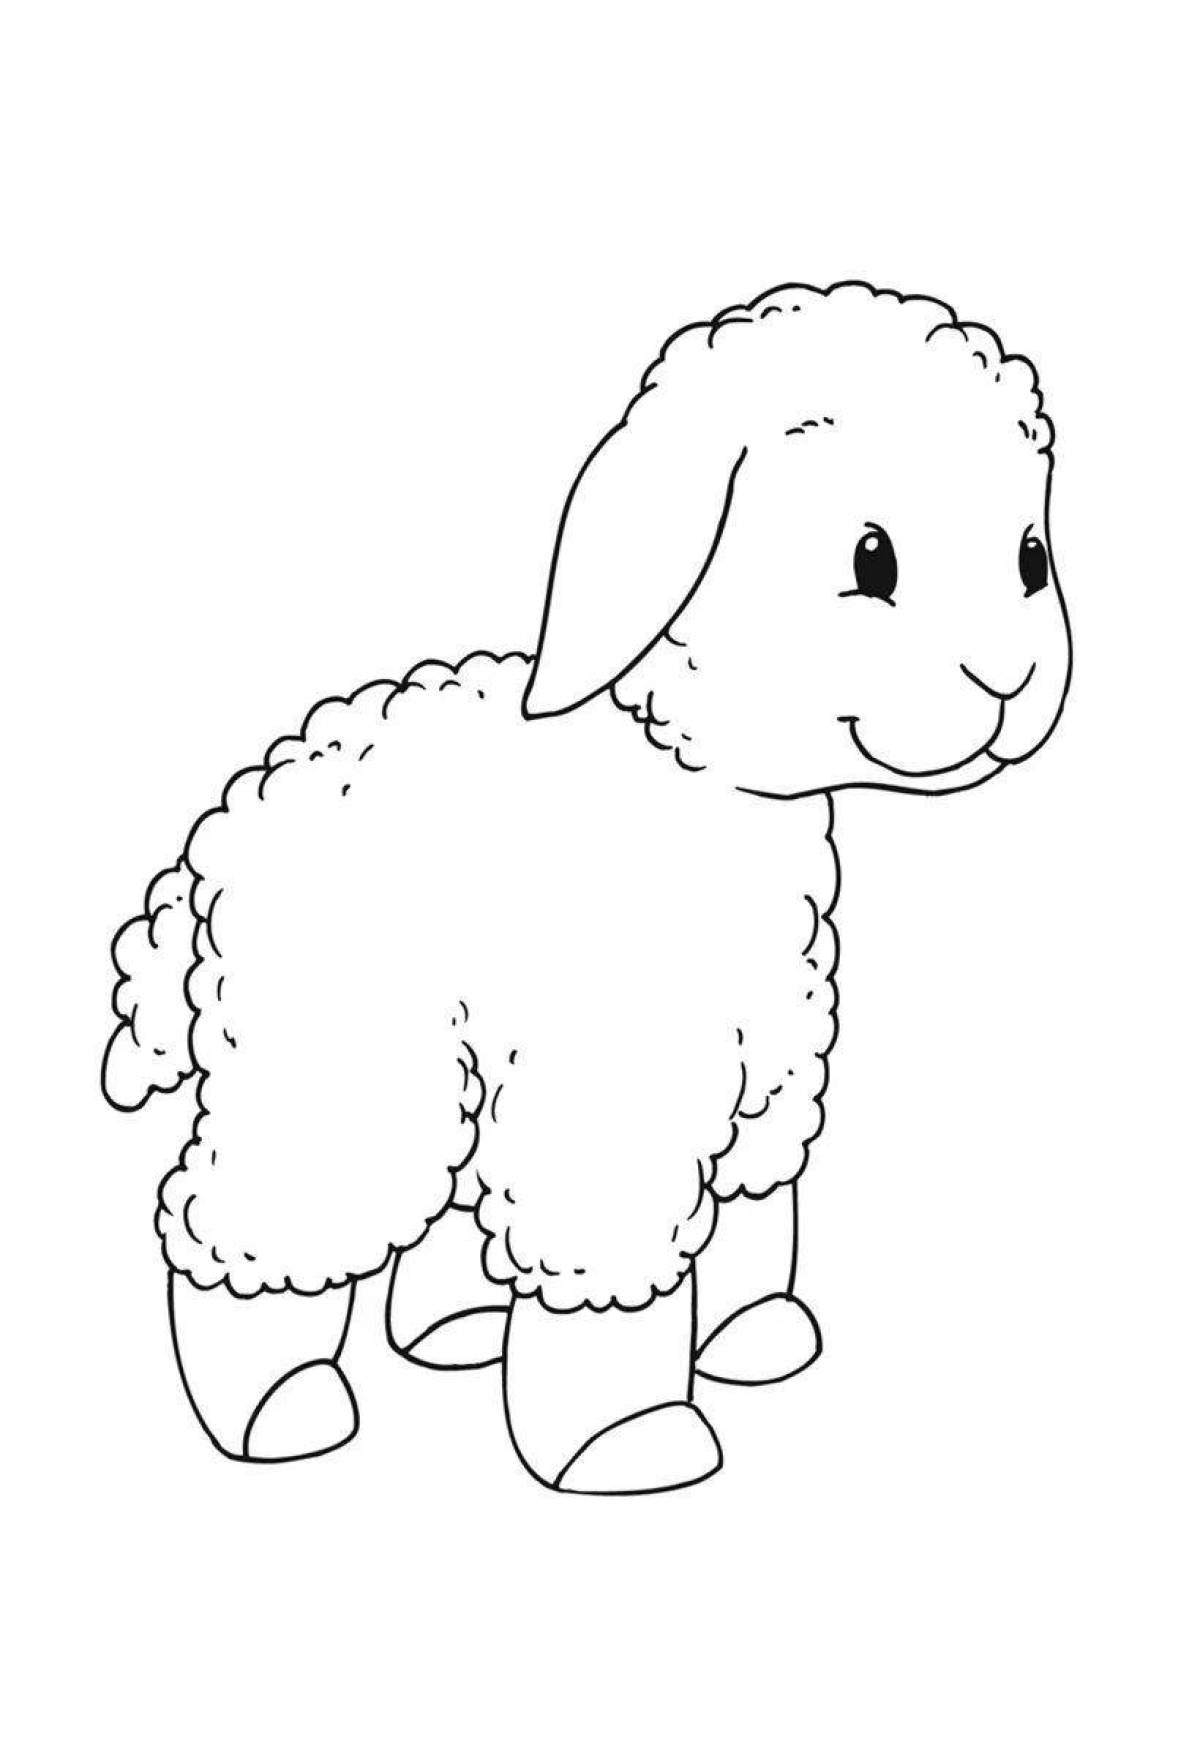 Lamb wavy coloring book